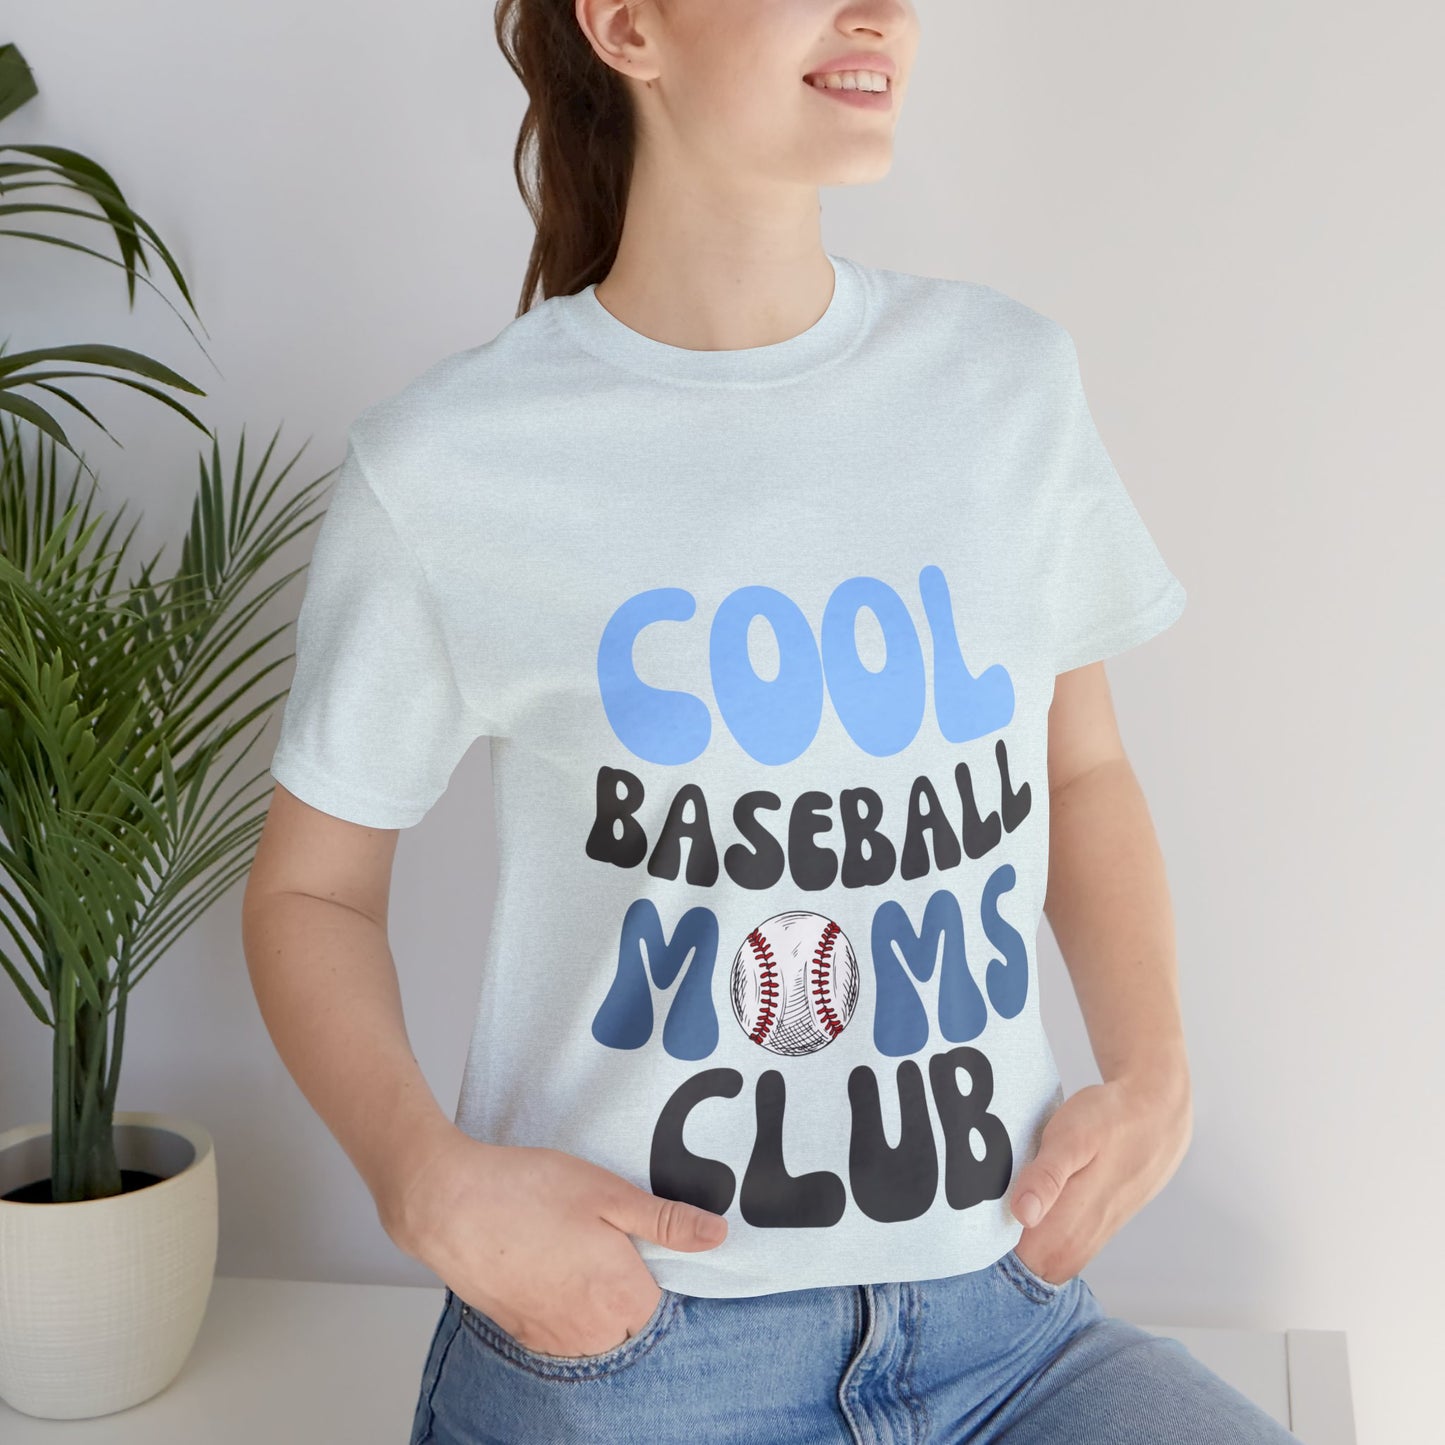 Cool Baseball Moms Club - Unisex Jersey Short Sleeve Tee